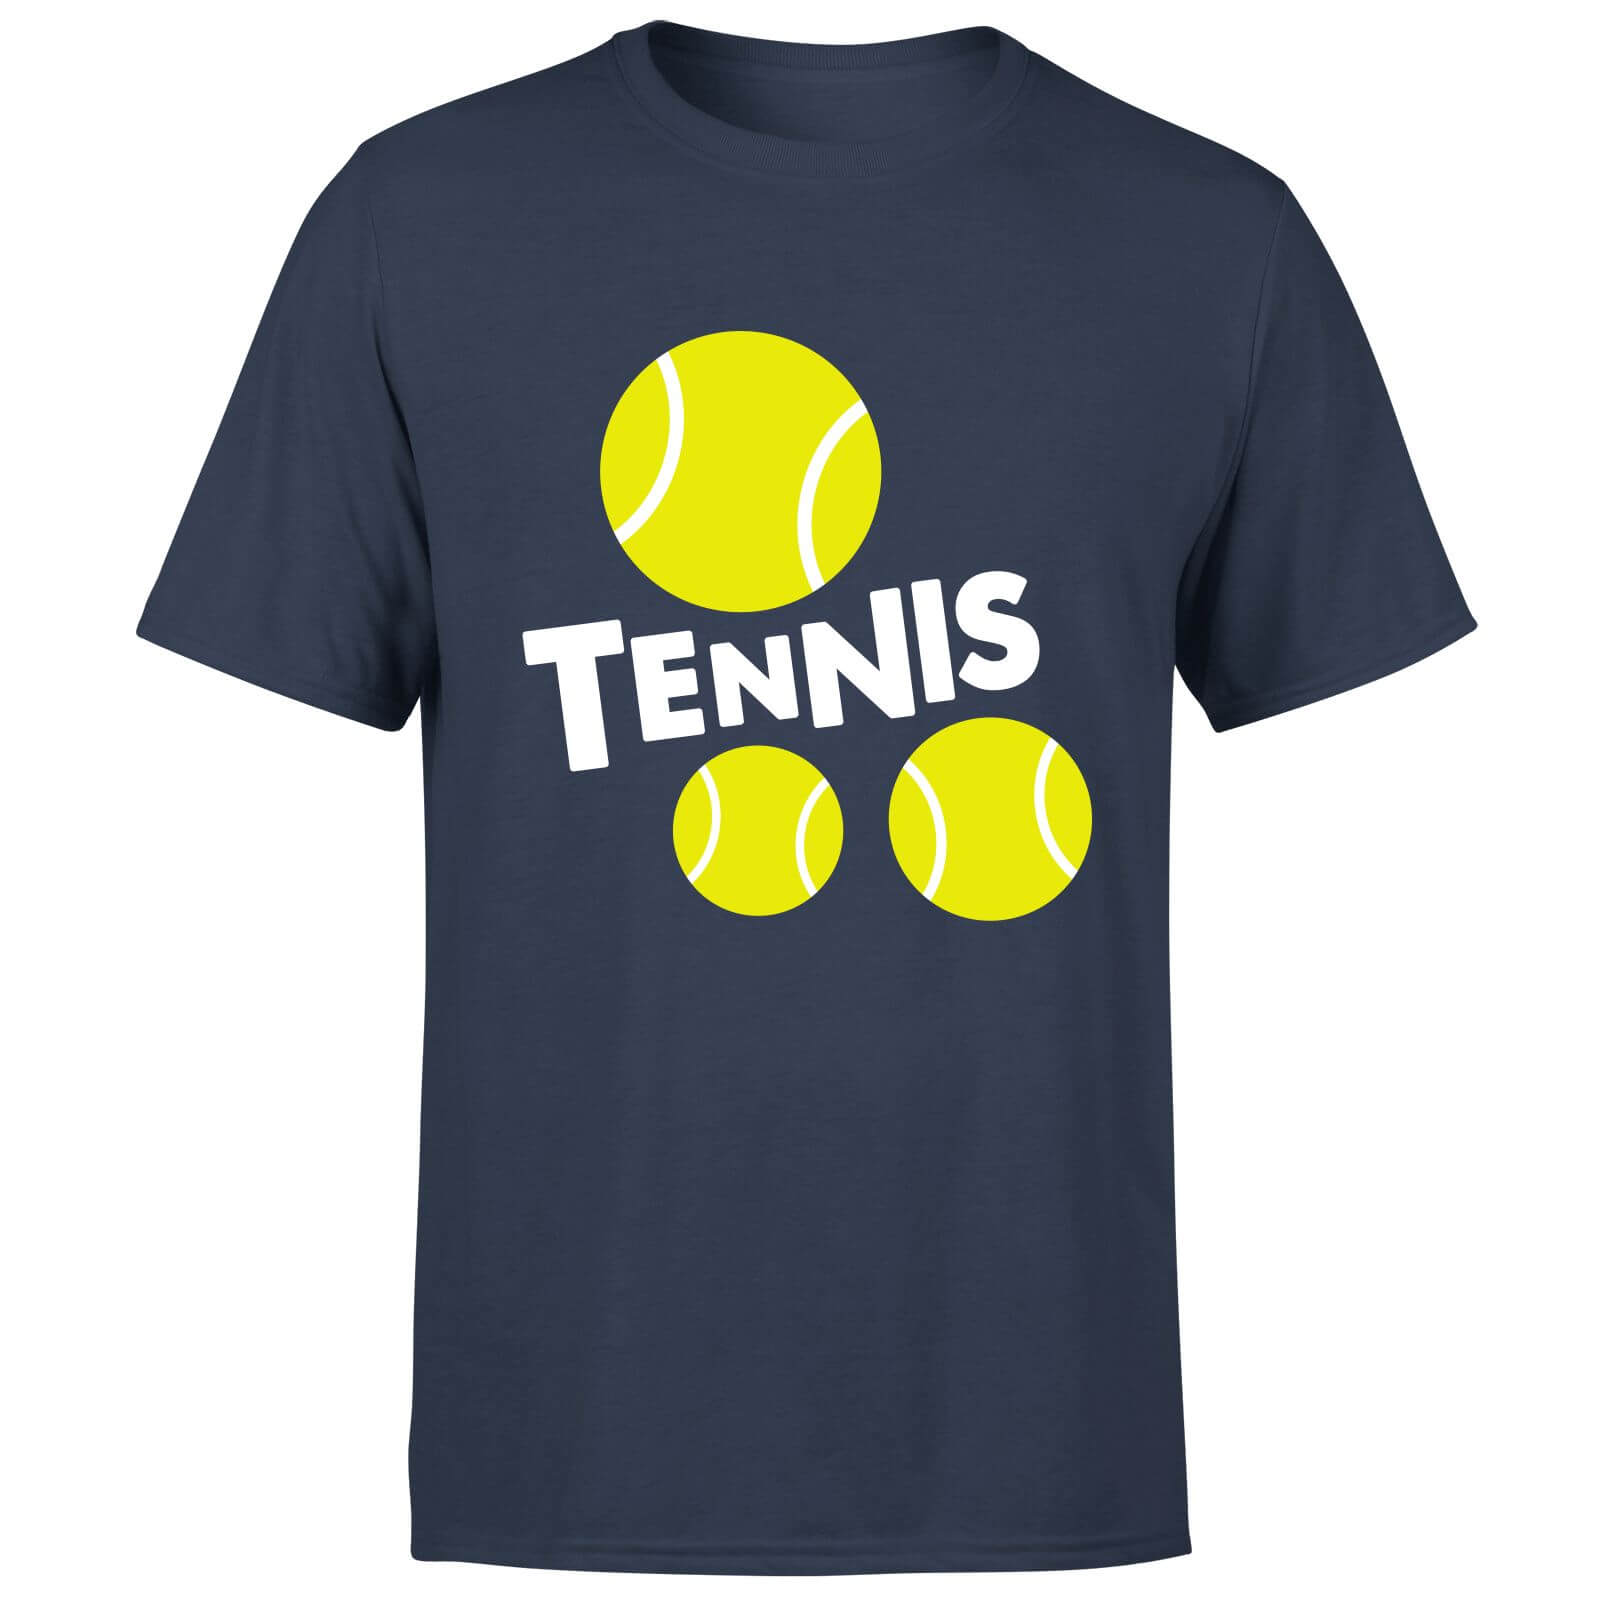 Tennis Balls T-Shirt - Navy - S - Navy